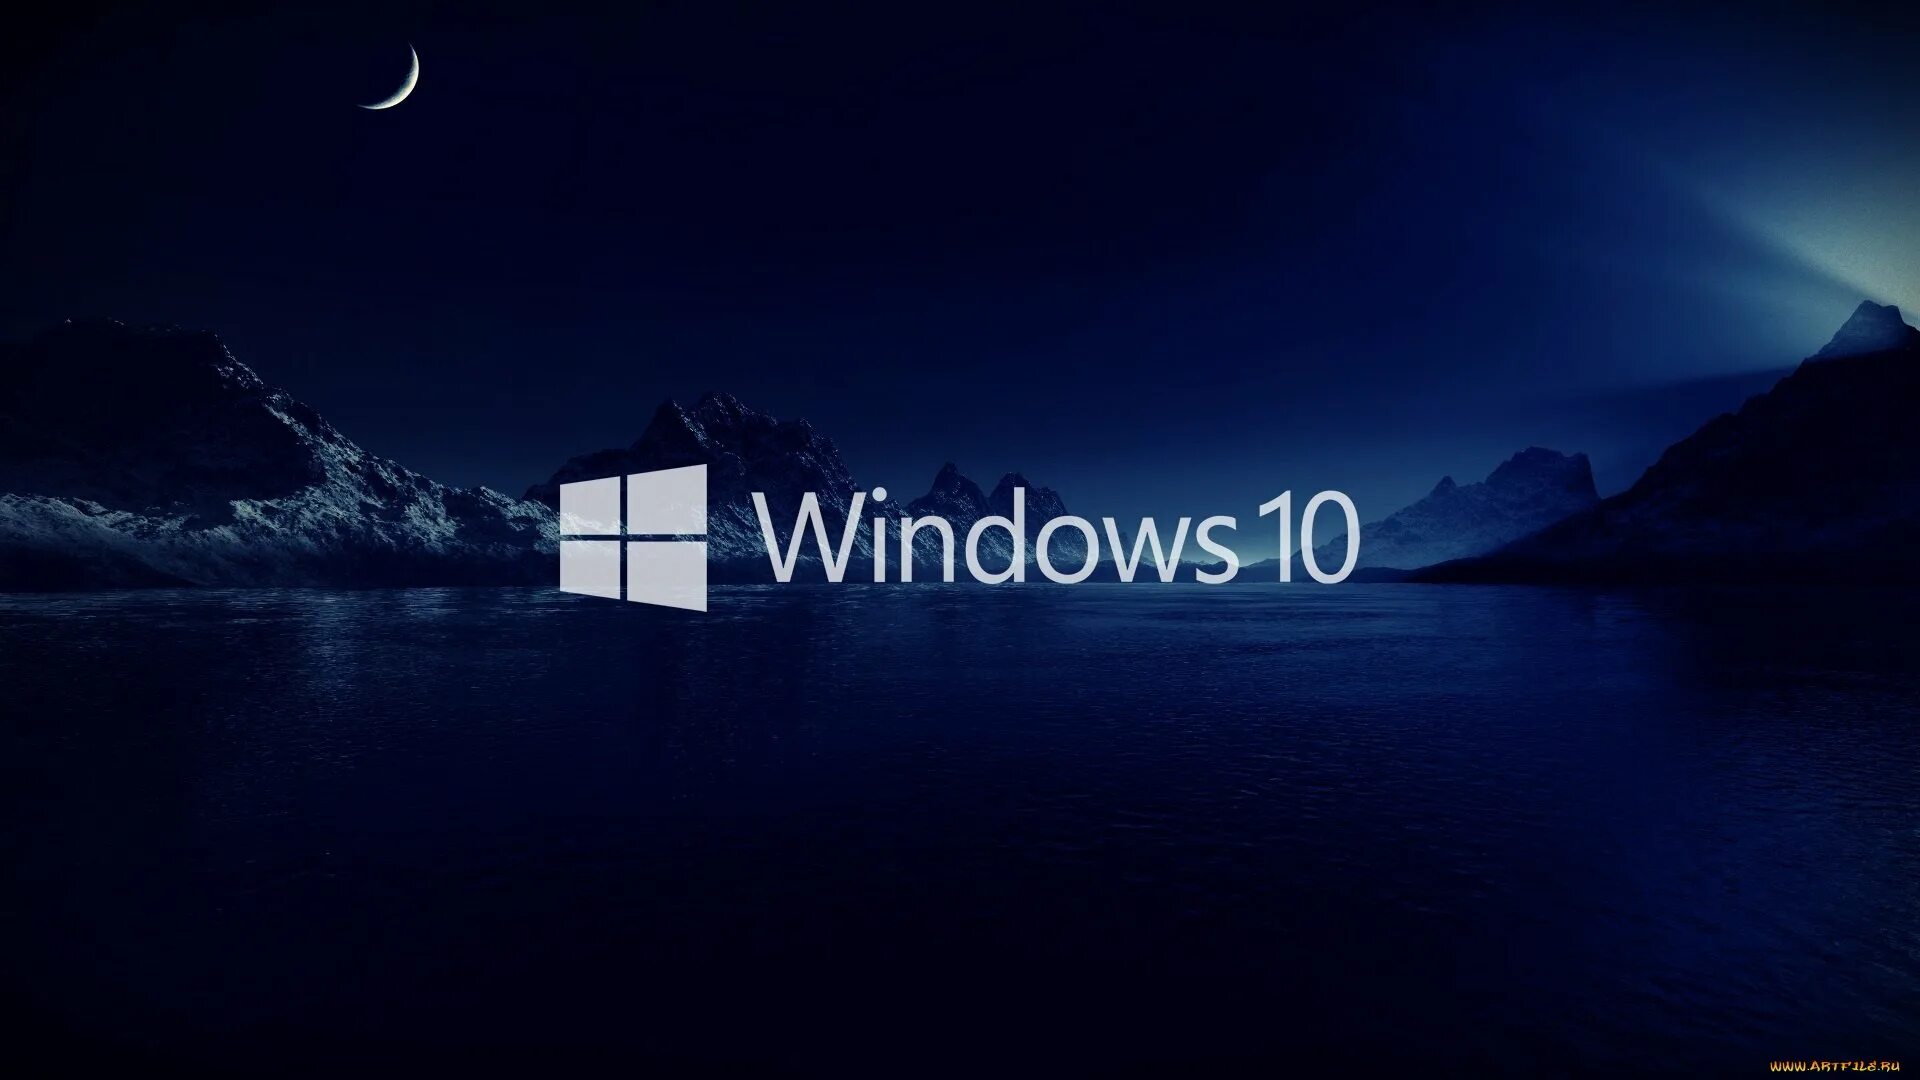 Инстаграм на ноутбук виндовс 10. Виндокюус 10. Заставка виндовс 10. Картинки Windows 10. Фоновое изображение Windows 10.